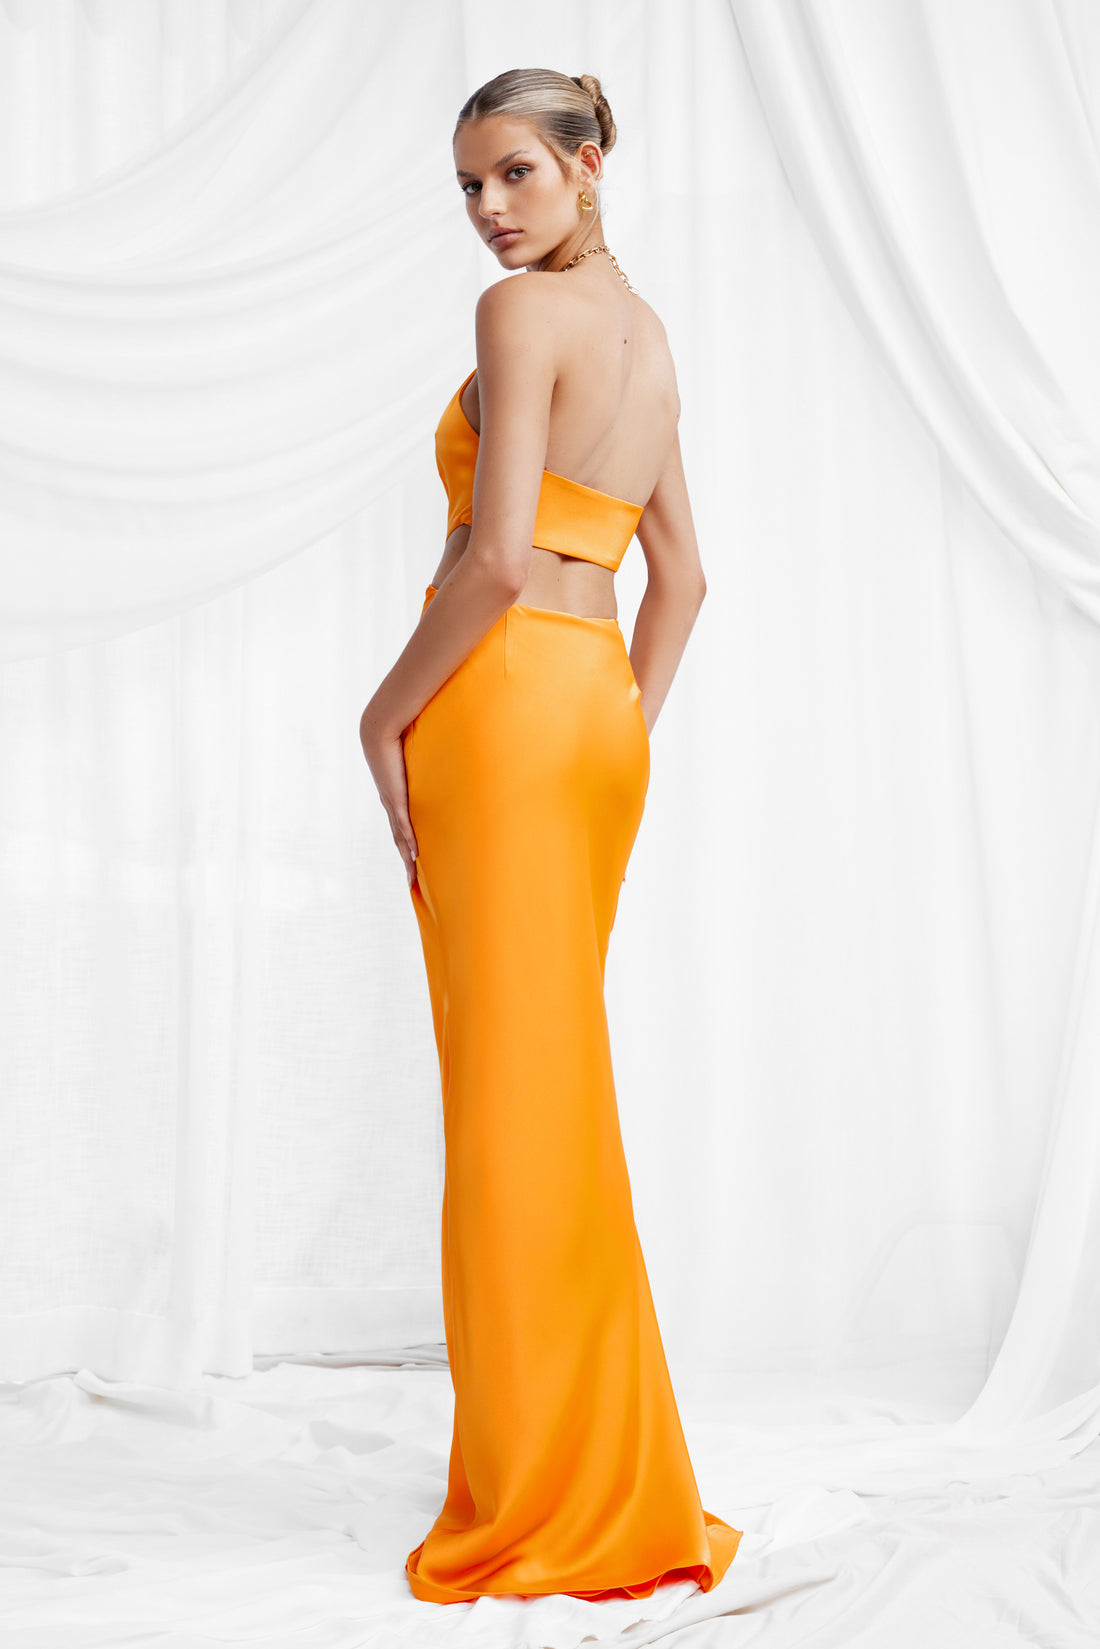 Lexi LEXI Morena Dress (Mango Orange) - RRP $379 - 2330MMorenaDressMango5_1100x_3f634364-84e7-49b6-b103-2d61107b2fed.jpg